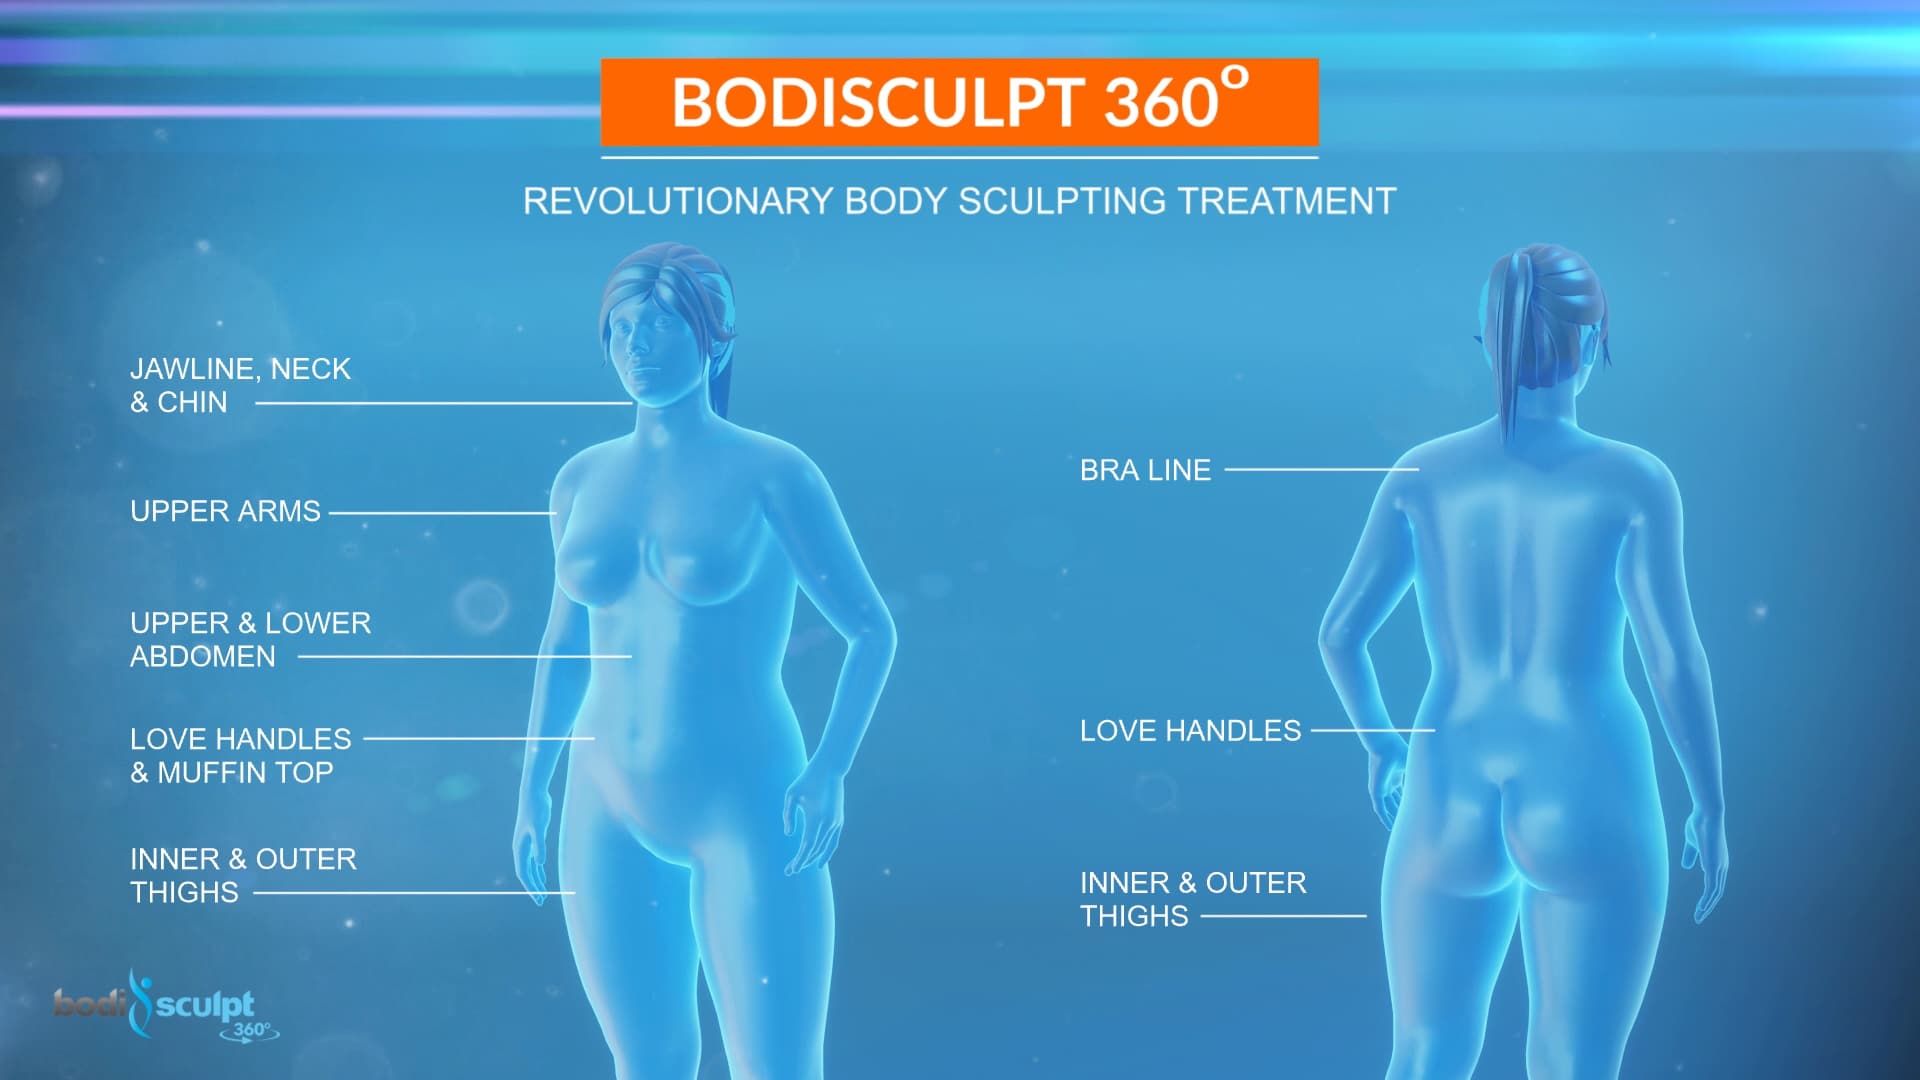 bodisculpt is a revolutionary treatment